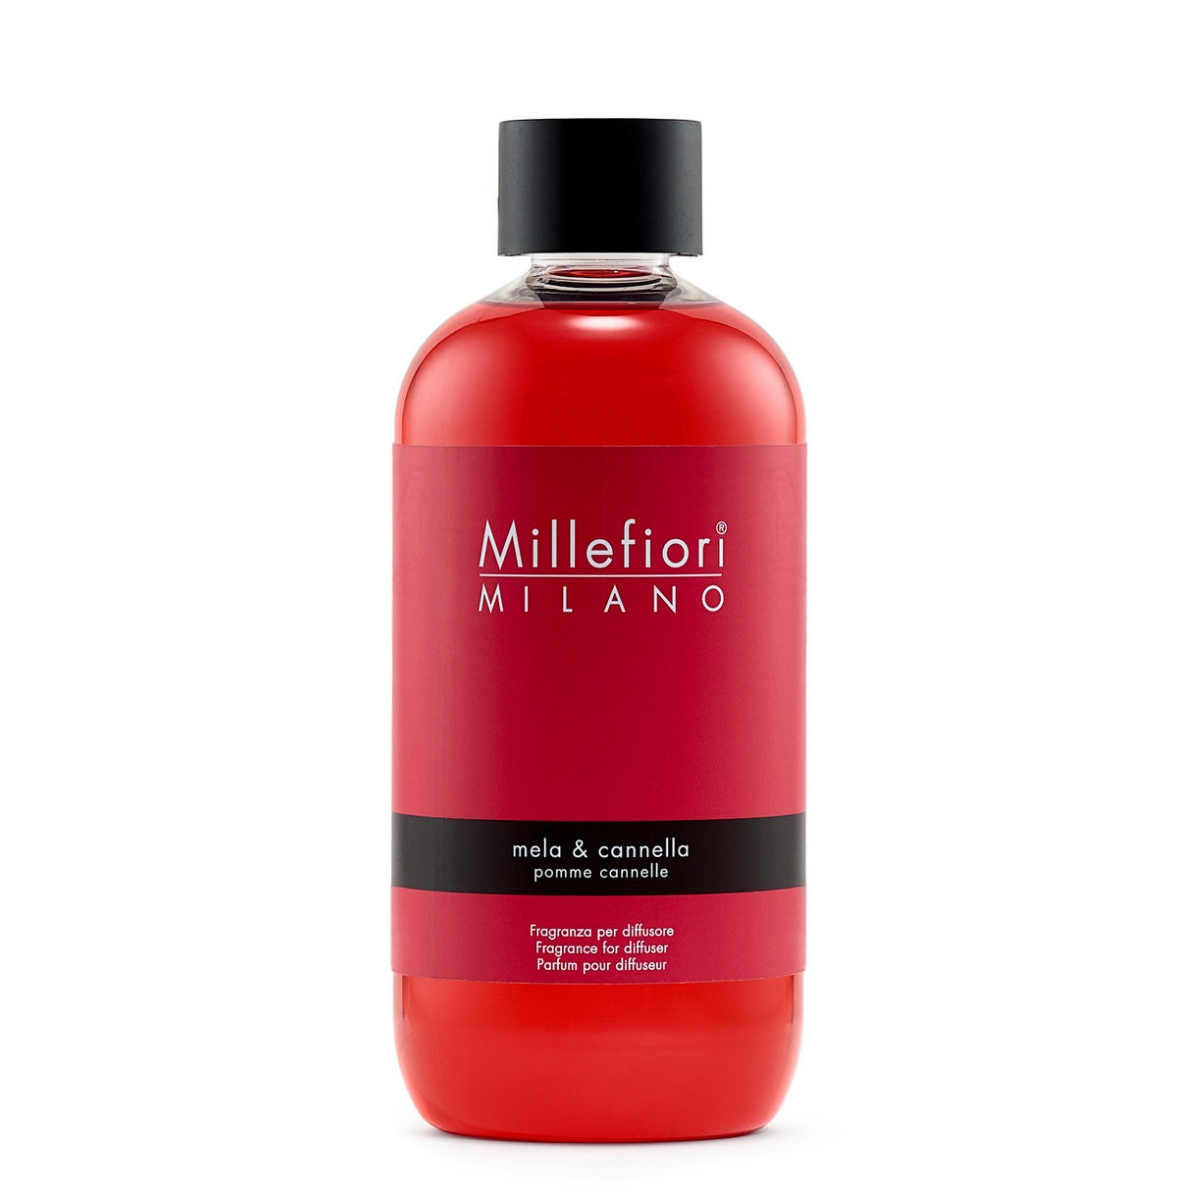 Millefiori Milano NATURAL – MELA & CANNELLA NÁPLŇ DO DIFUZÉRU 250 ml 250 ml